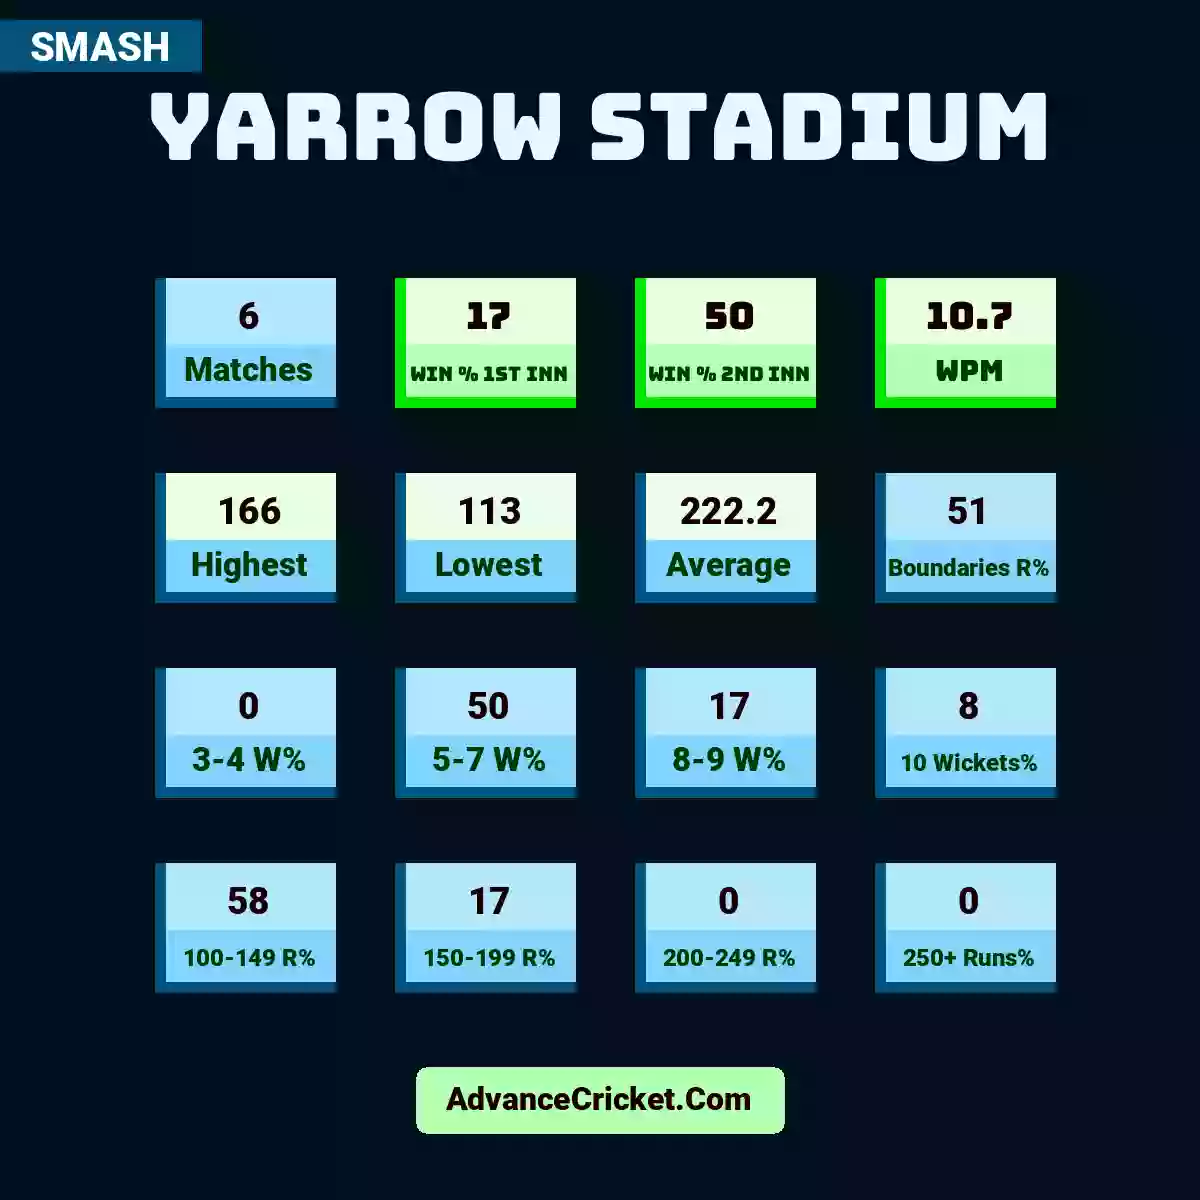 Image showing Yarrow Stadium with Matches: 6, Win % 1st Inn: 17, Win % 2nd Inn: 50, WPM: 10.7, Highest: 166, Lowest: 113, Average: 222.2, Boundaries R%: 51, 3-4 W%: 0, 5-7 W%: 50, 8-9 W%: 17, 10 Wickets%: 8, 100-149 R%: 58, 150-199 R%: 17, 200-249 R%: 0, 250+ Runs%: 0.